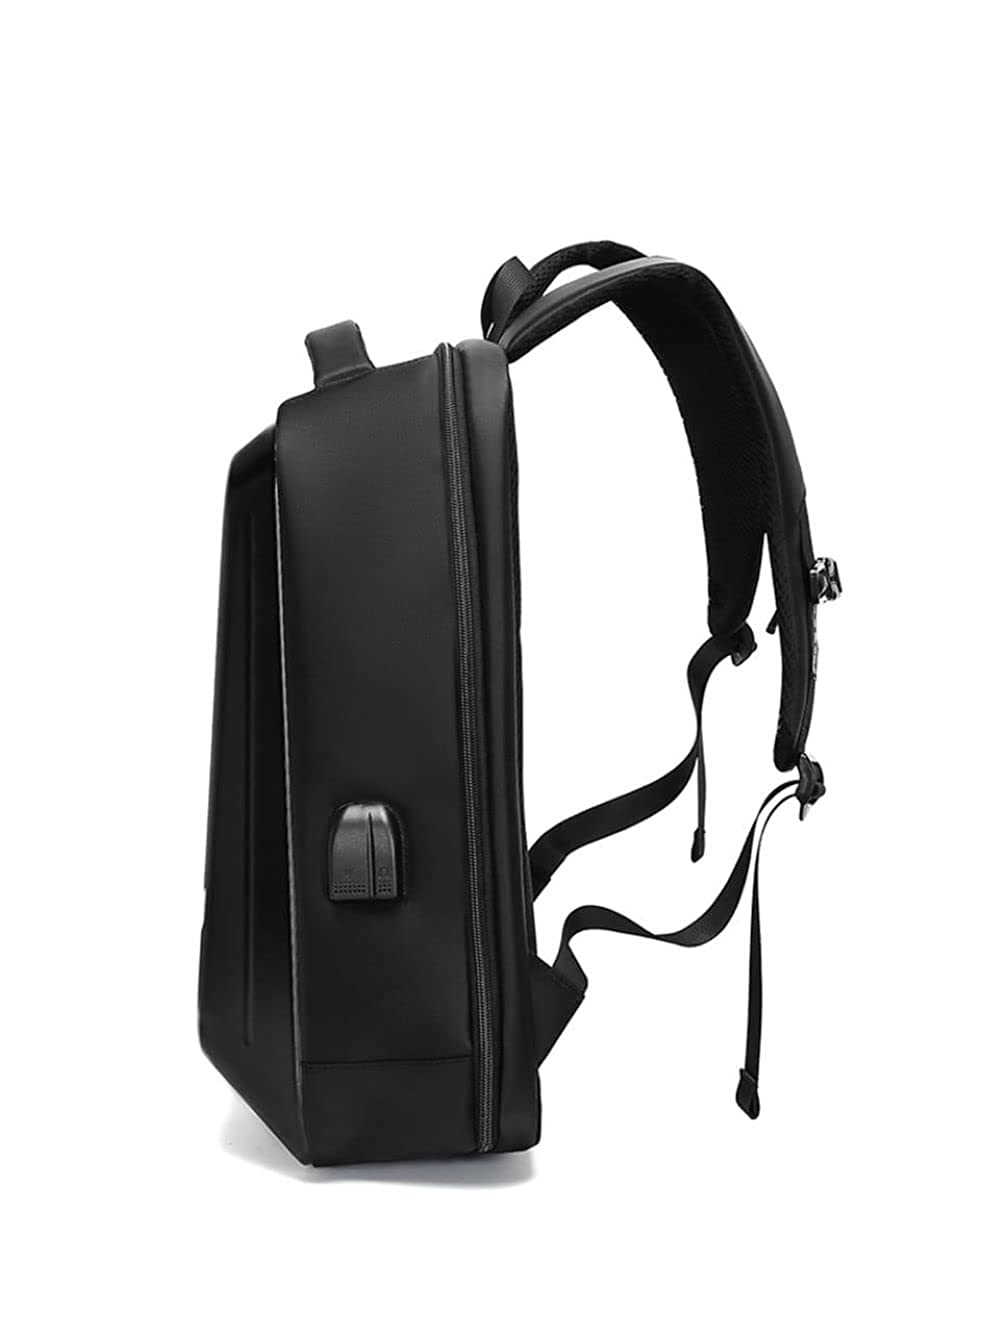 Lightweight Hard Bag for 13-13.3 Inch Laptop or Tablet PC